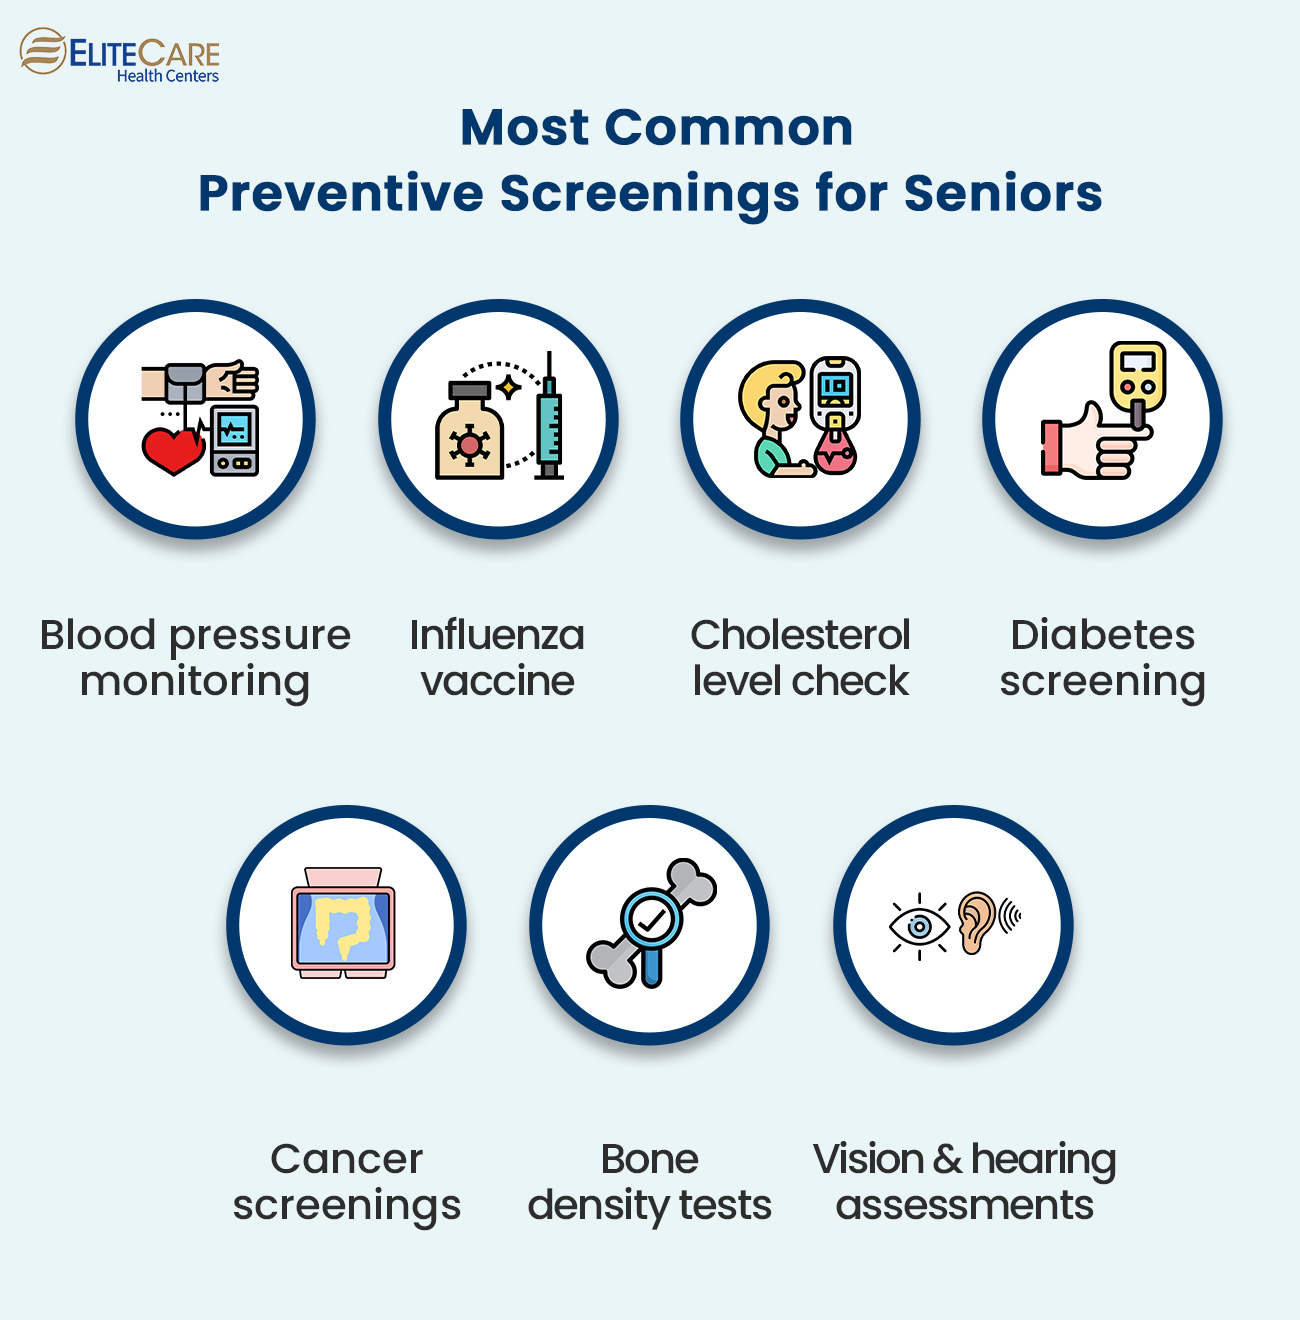 Most Common Preventive Screenings for Seniors